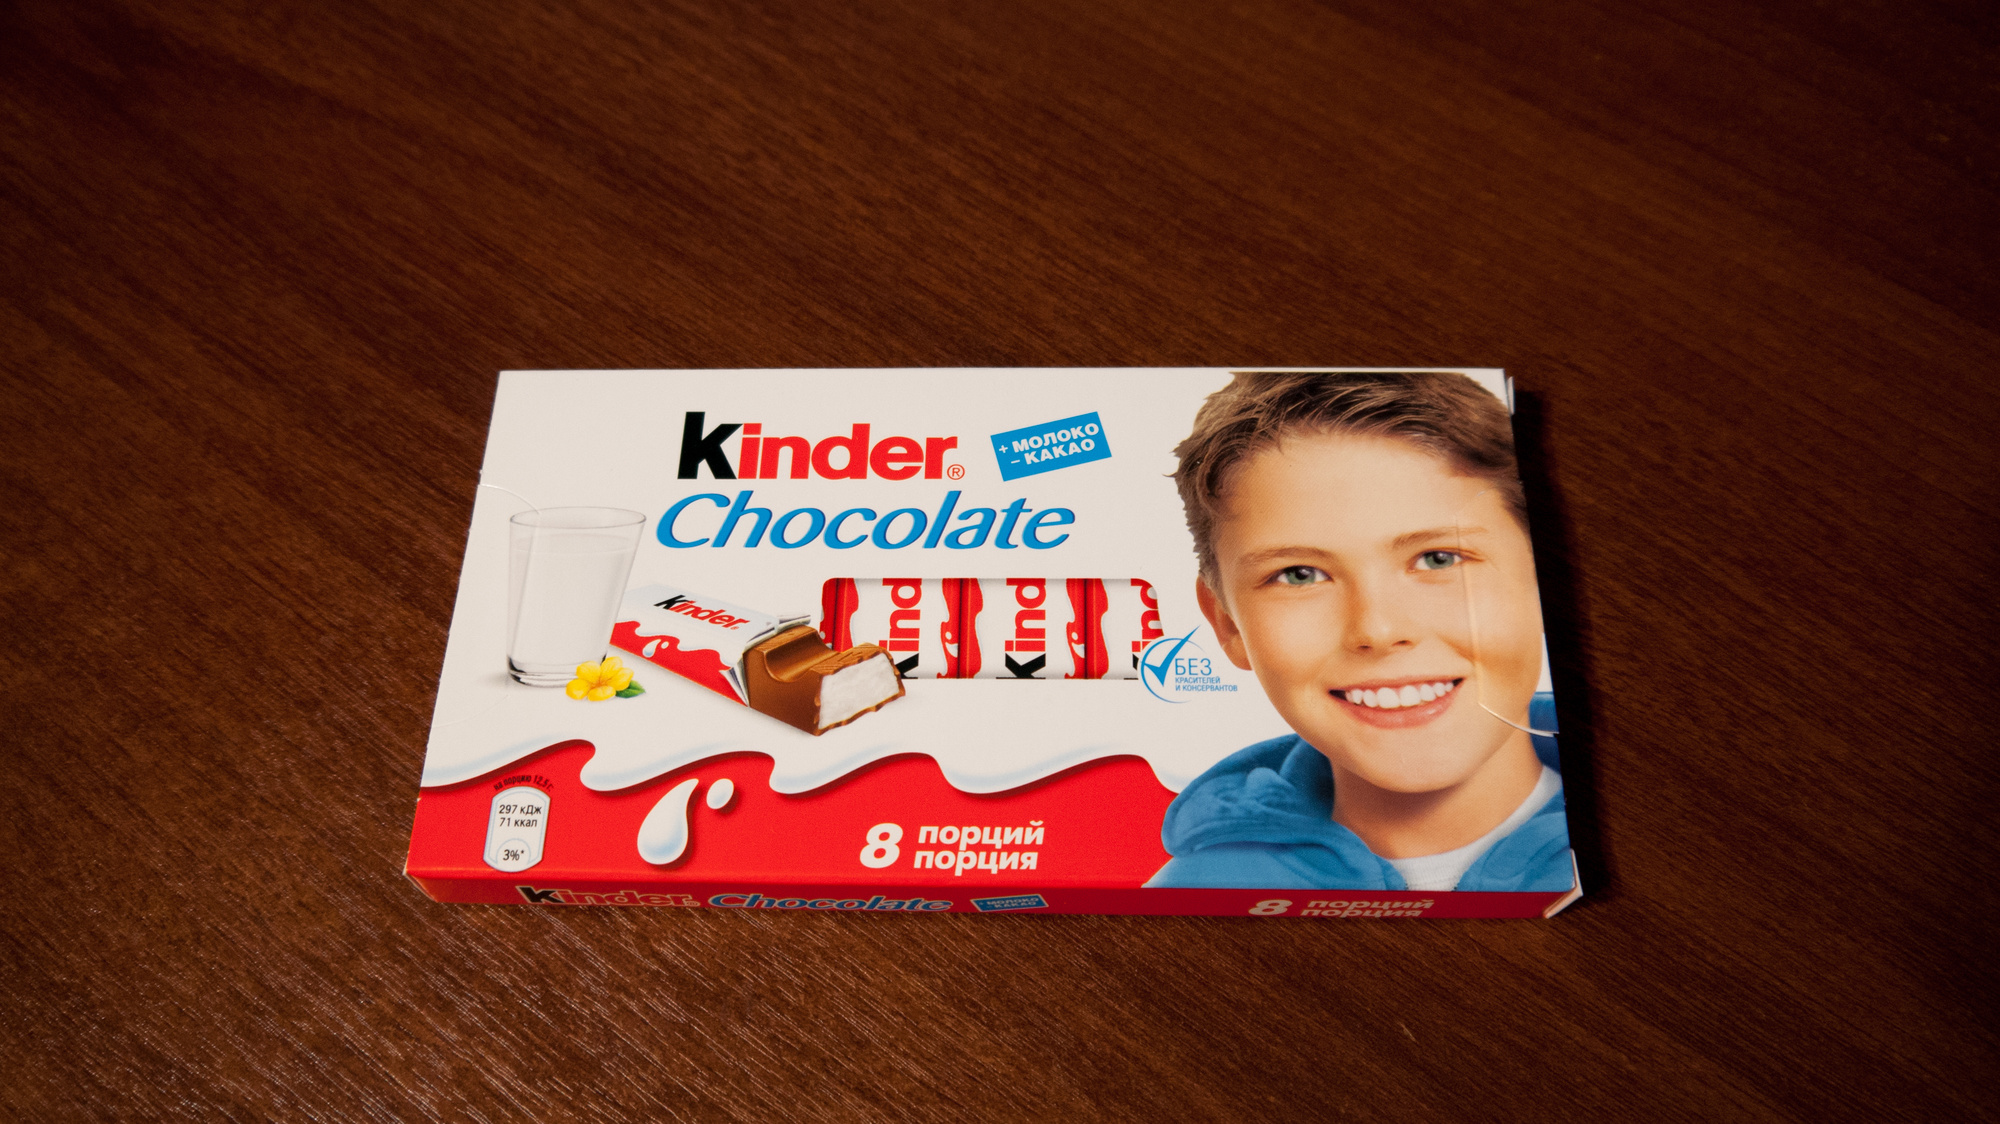 Kinder 12. Киндер шоколад. Шоколад kinder Chocolate. Киндер шоколад 12 порций. Киндер шоколад 12 штук.